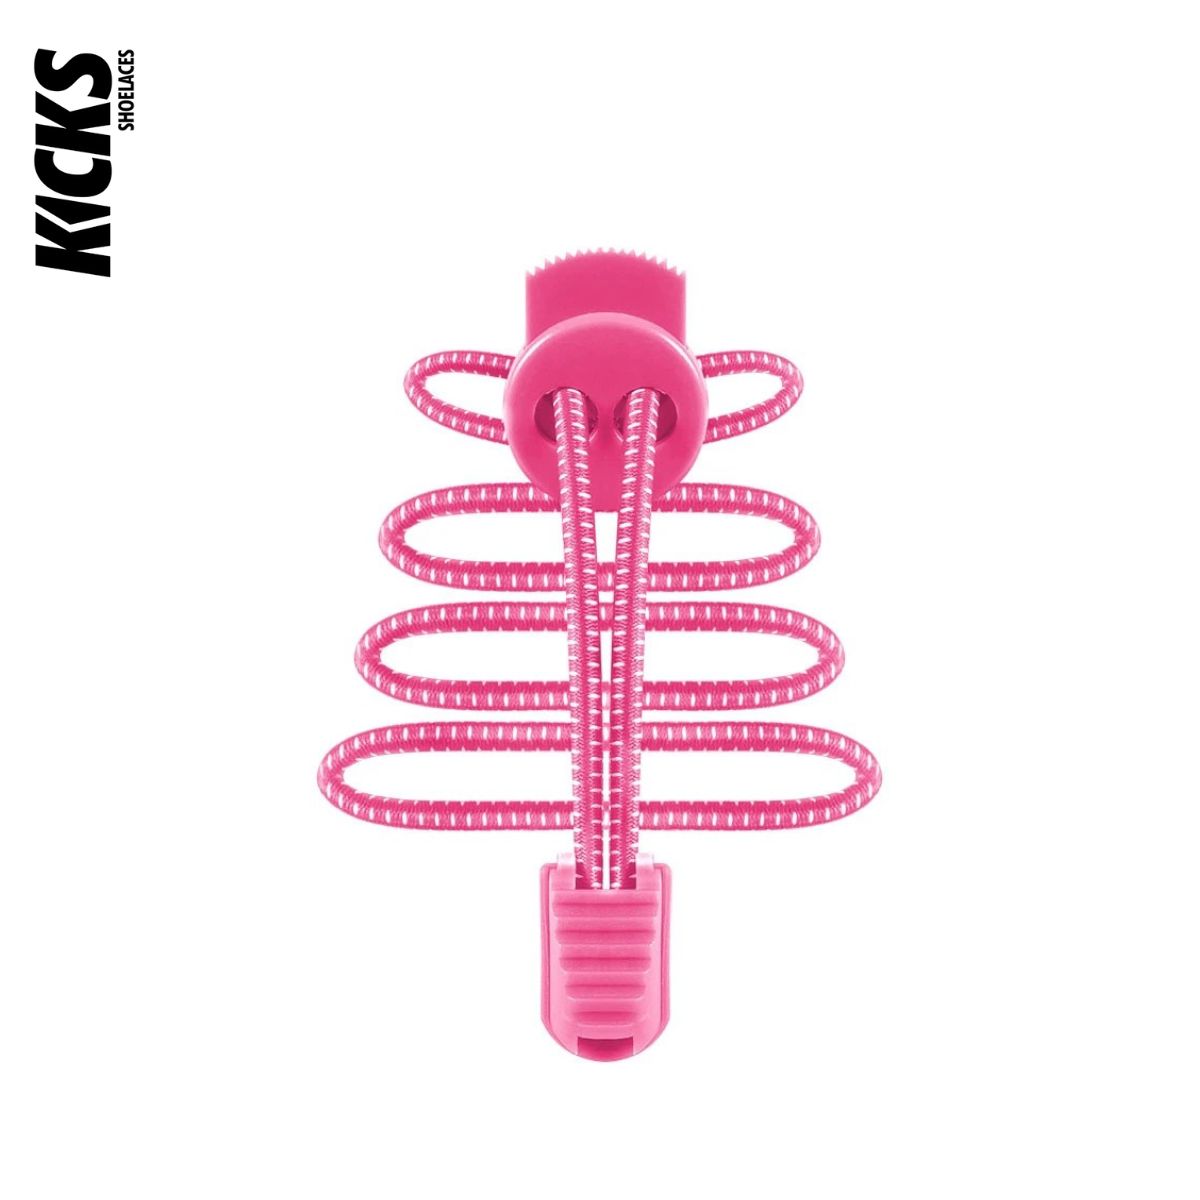 kicks-lock-laces-pink